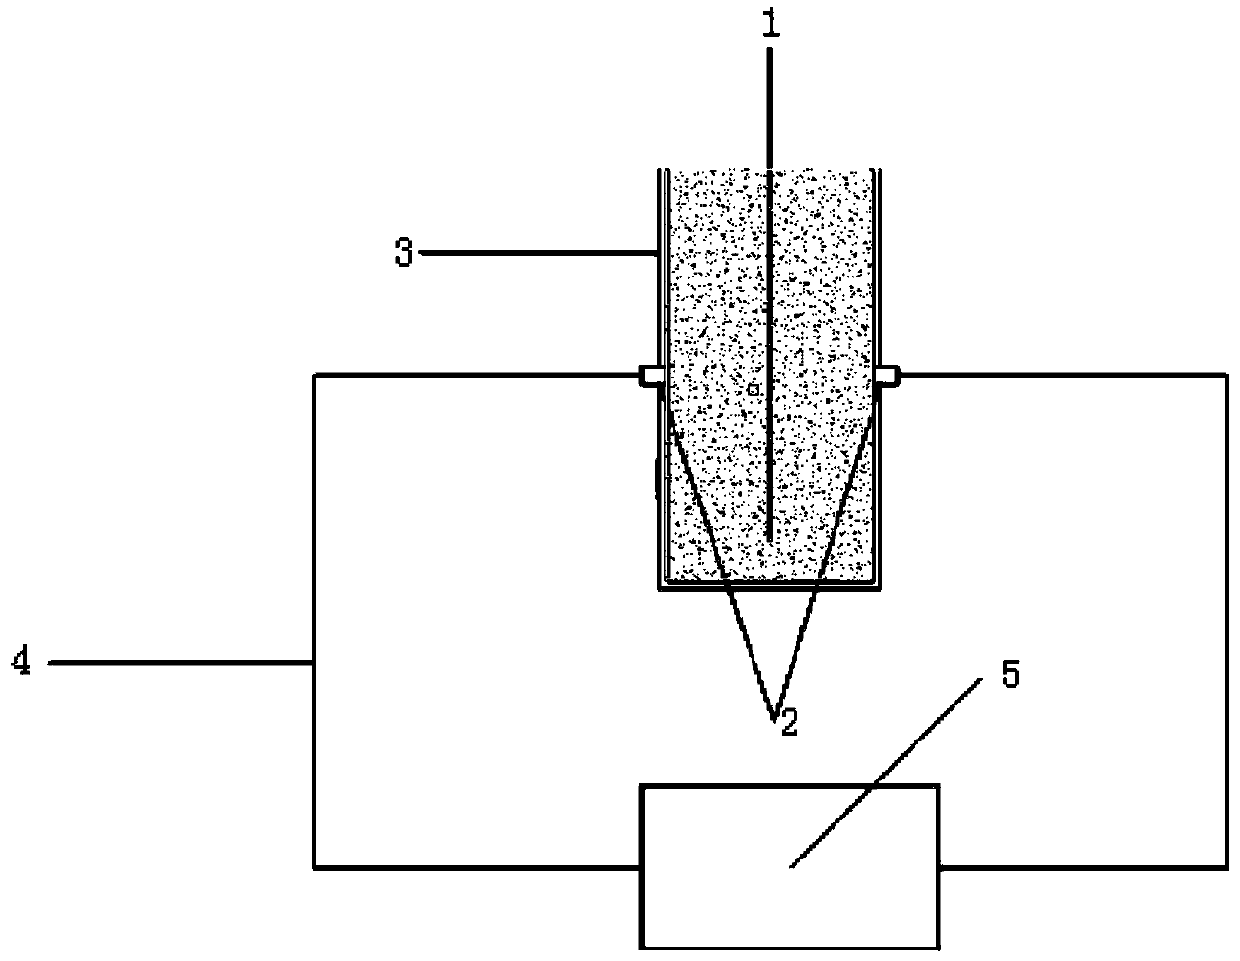 Method for detecting concrete slump through sound waves